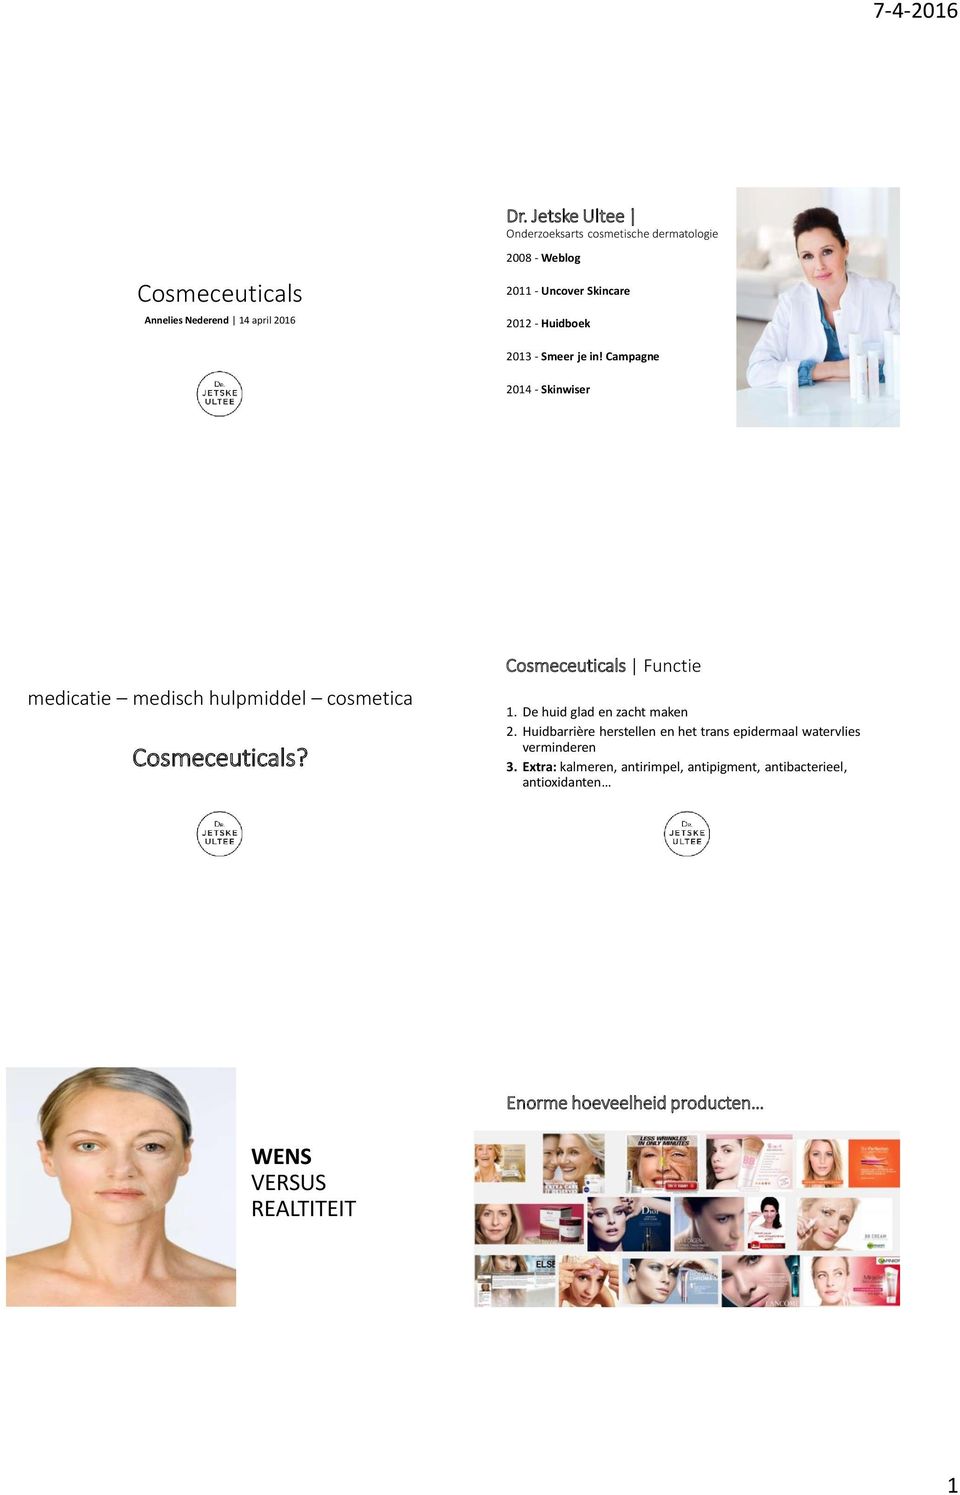 Campagne 2014 - Skinwiser medicatie medisch hulpmiddel cosmetica Cosmeceuticals? Cosmeceuticals Functie 1.